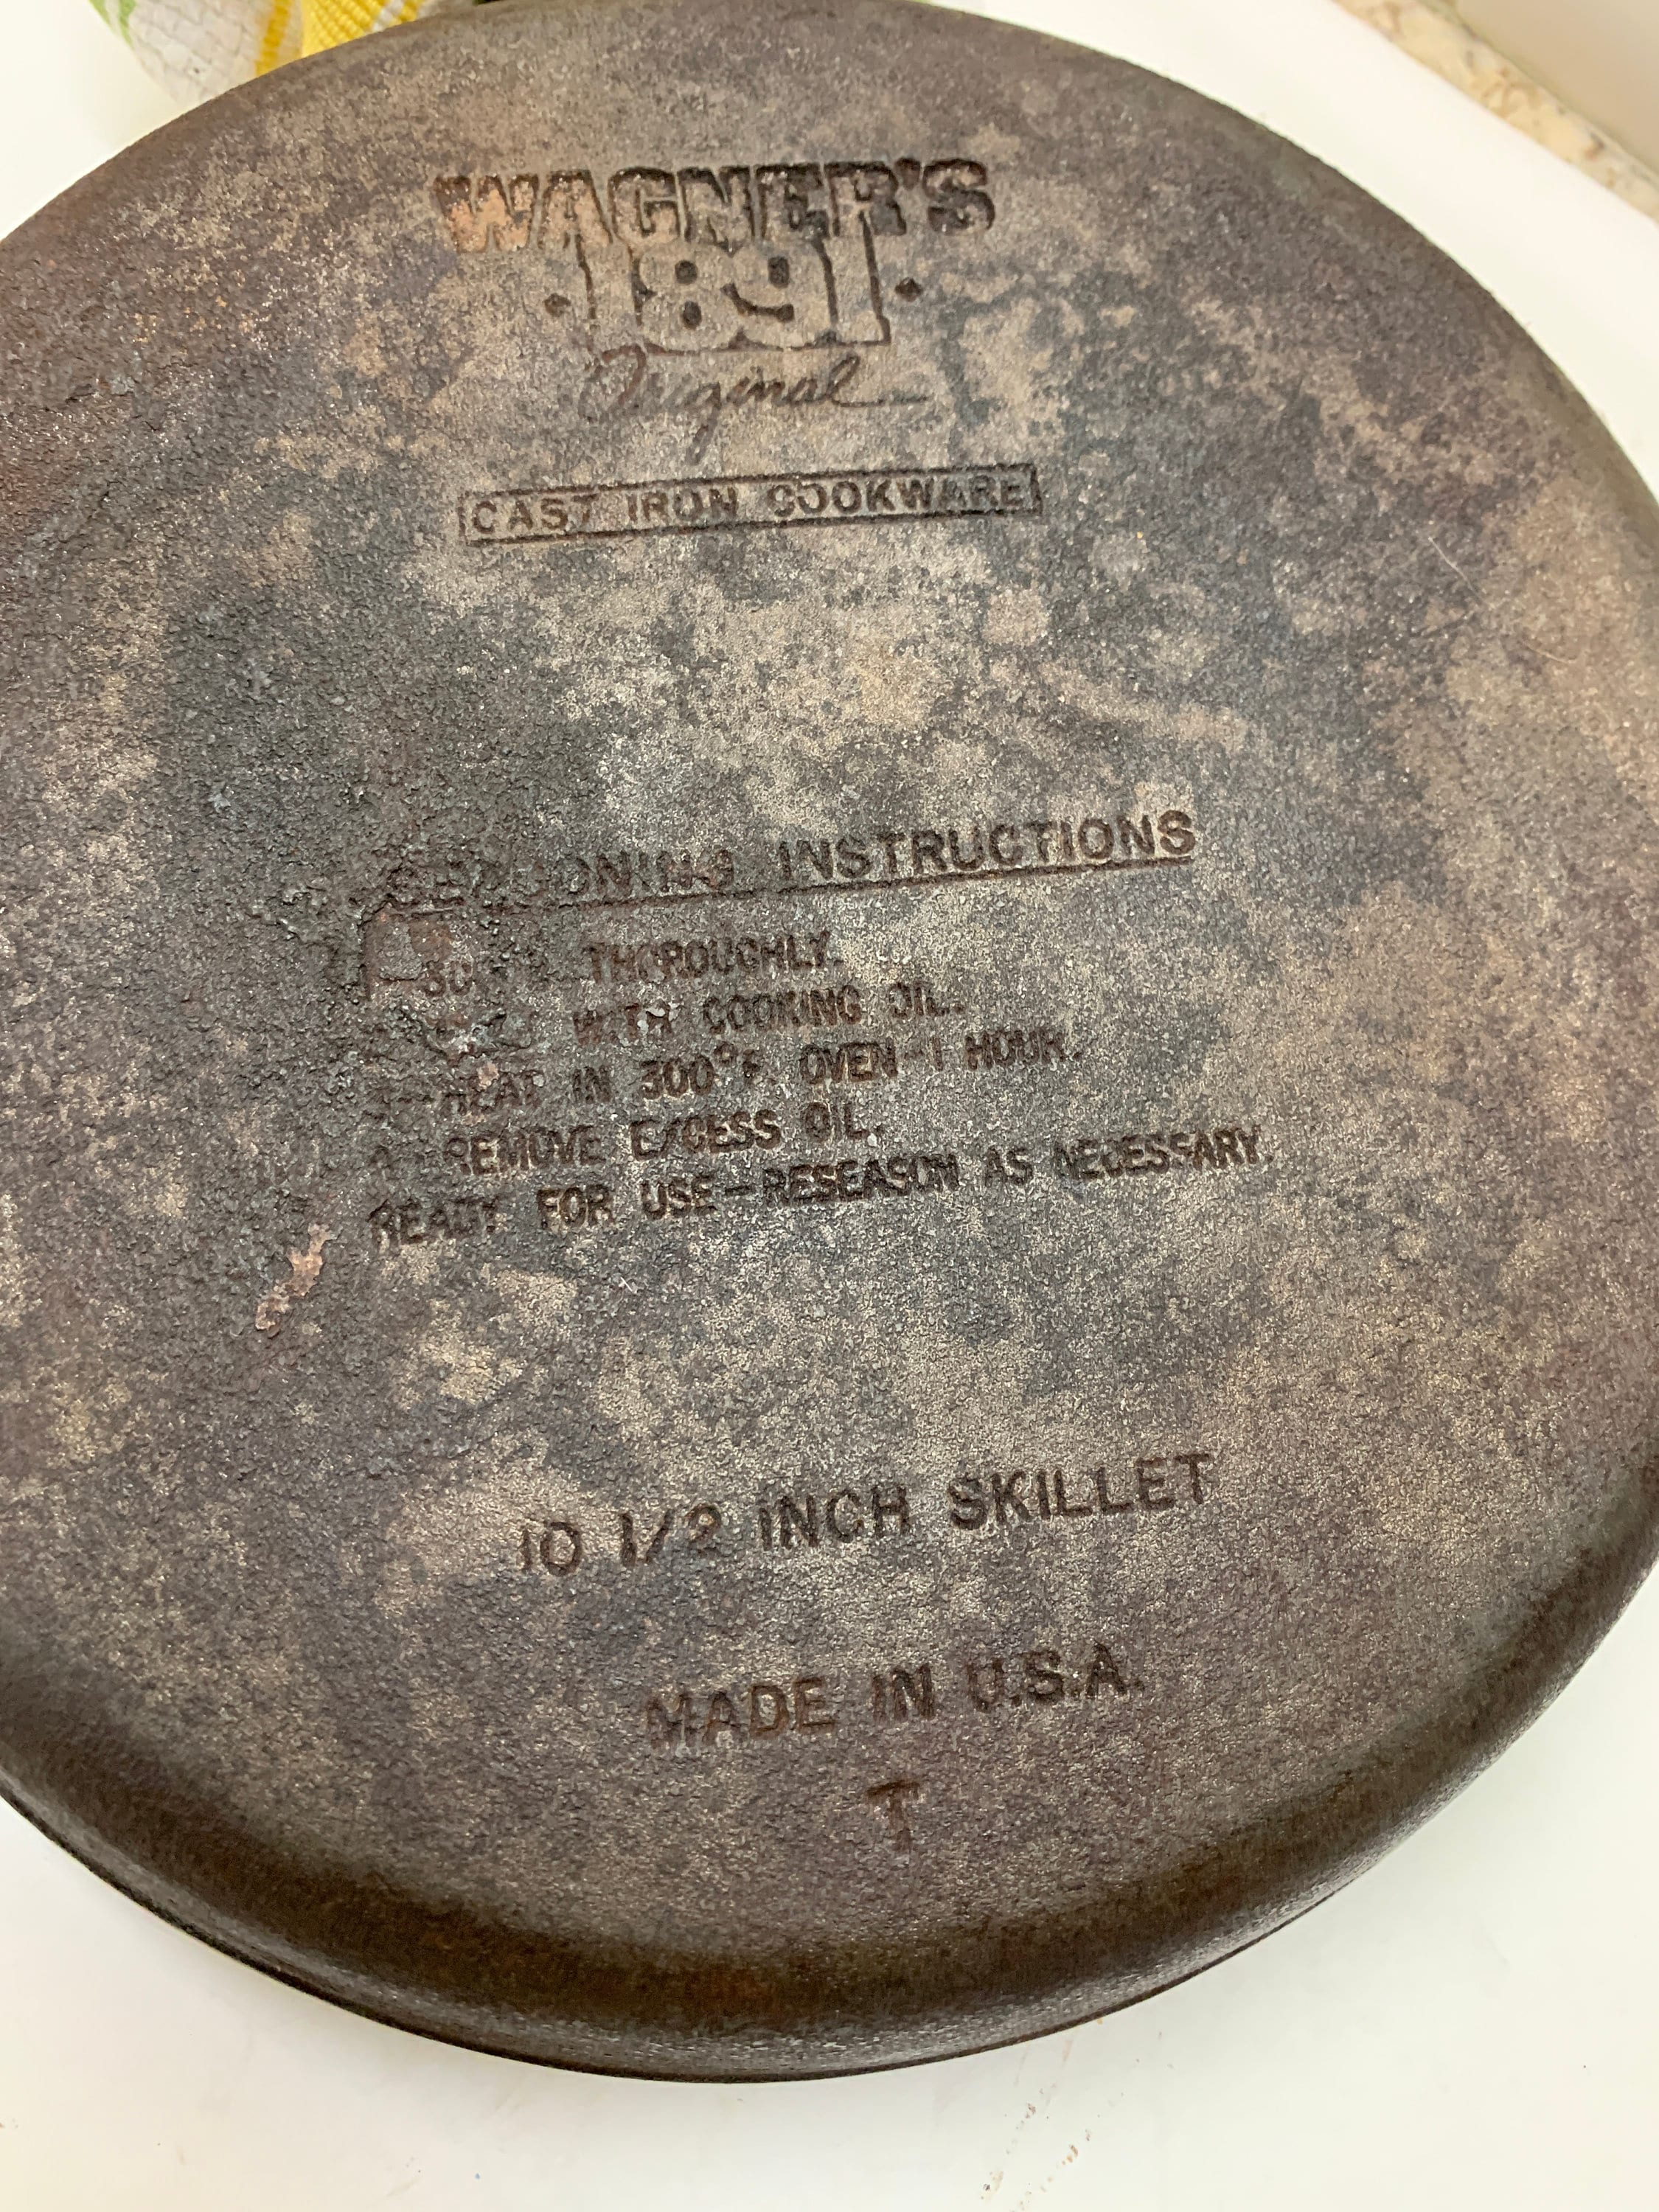 Vintage Wagner 1891 Original Cast Iron Skillet 10-1/2 Inch, Made in USA